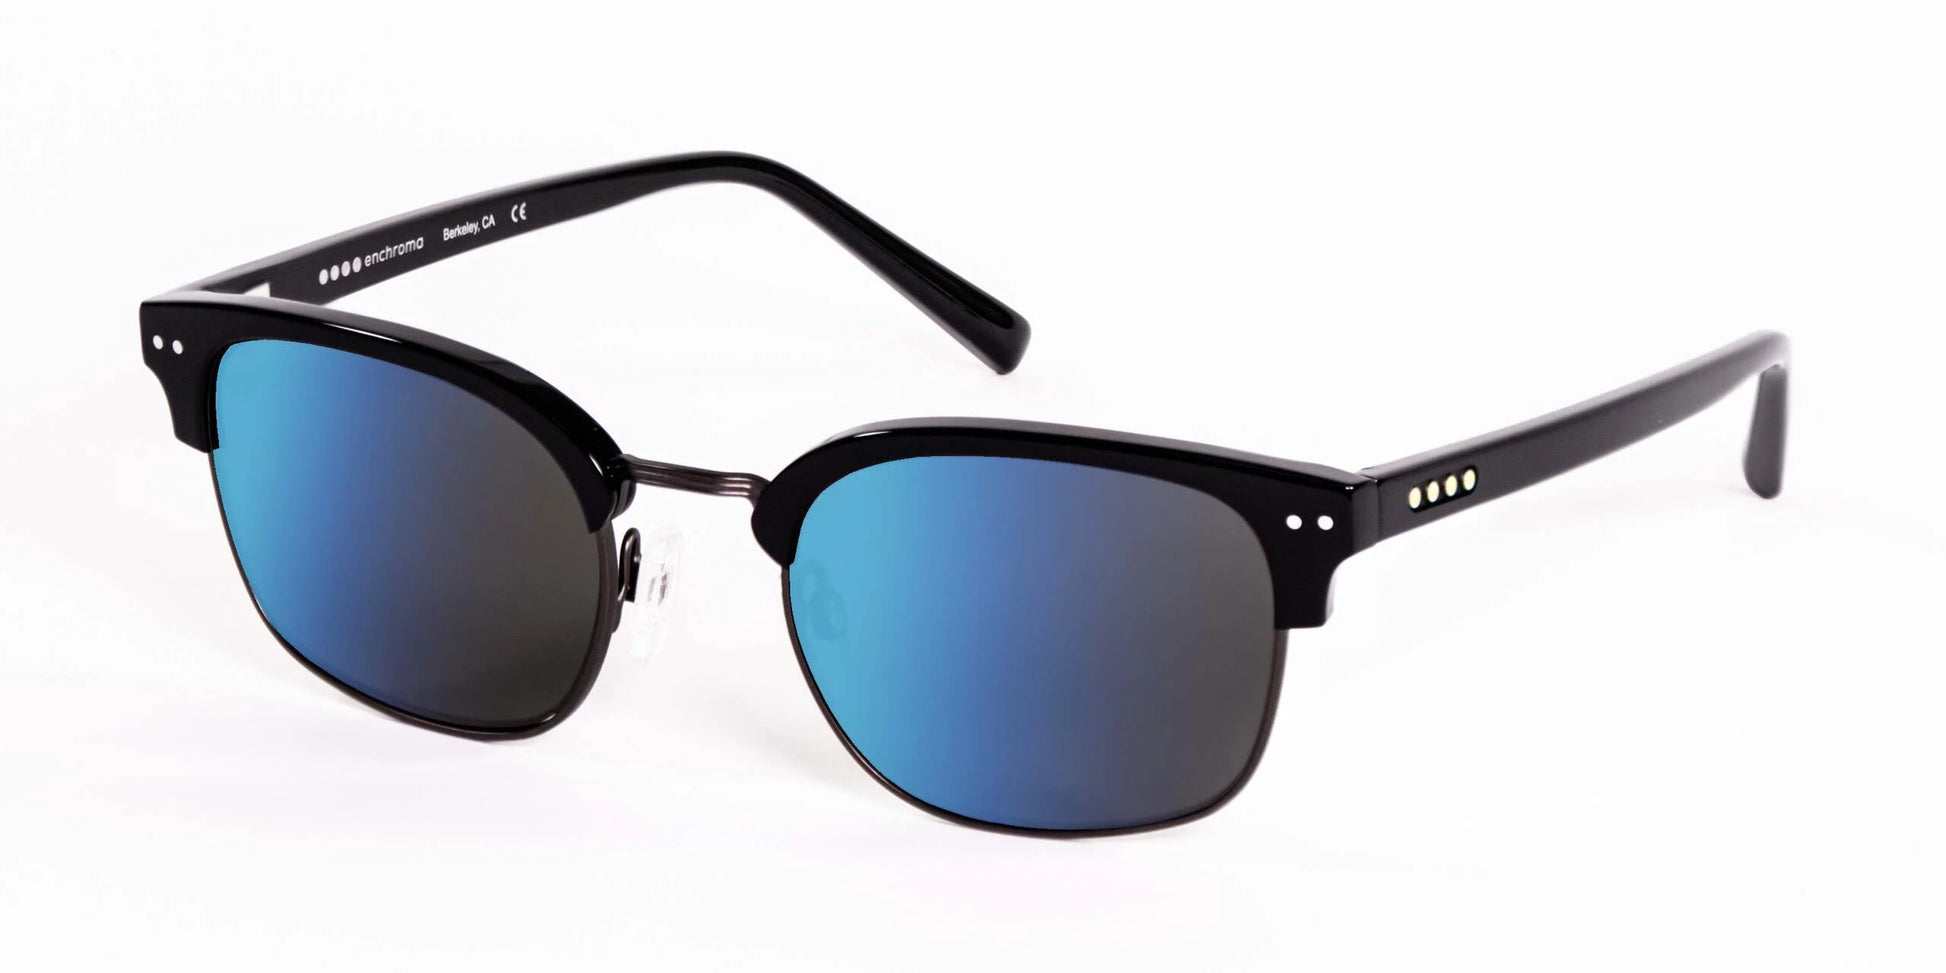 EnChroma Derby CX Sunglasses Black / Outdoor Protan Polarized